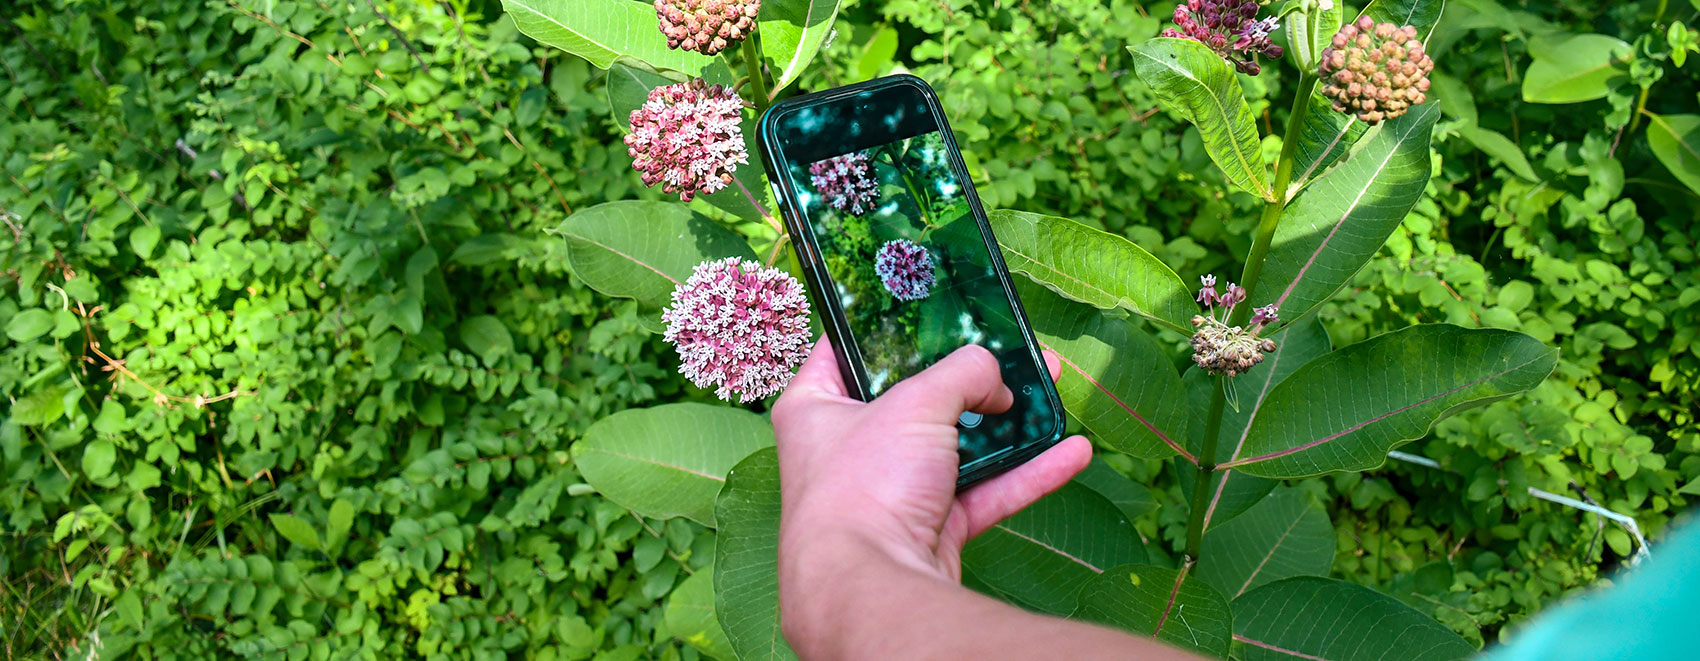 Apps to identify plants 